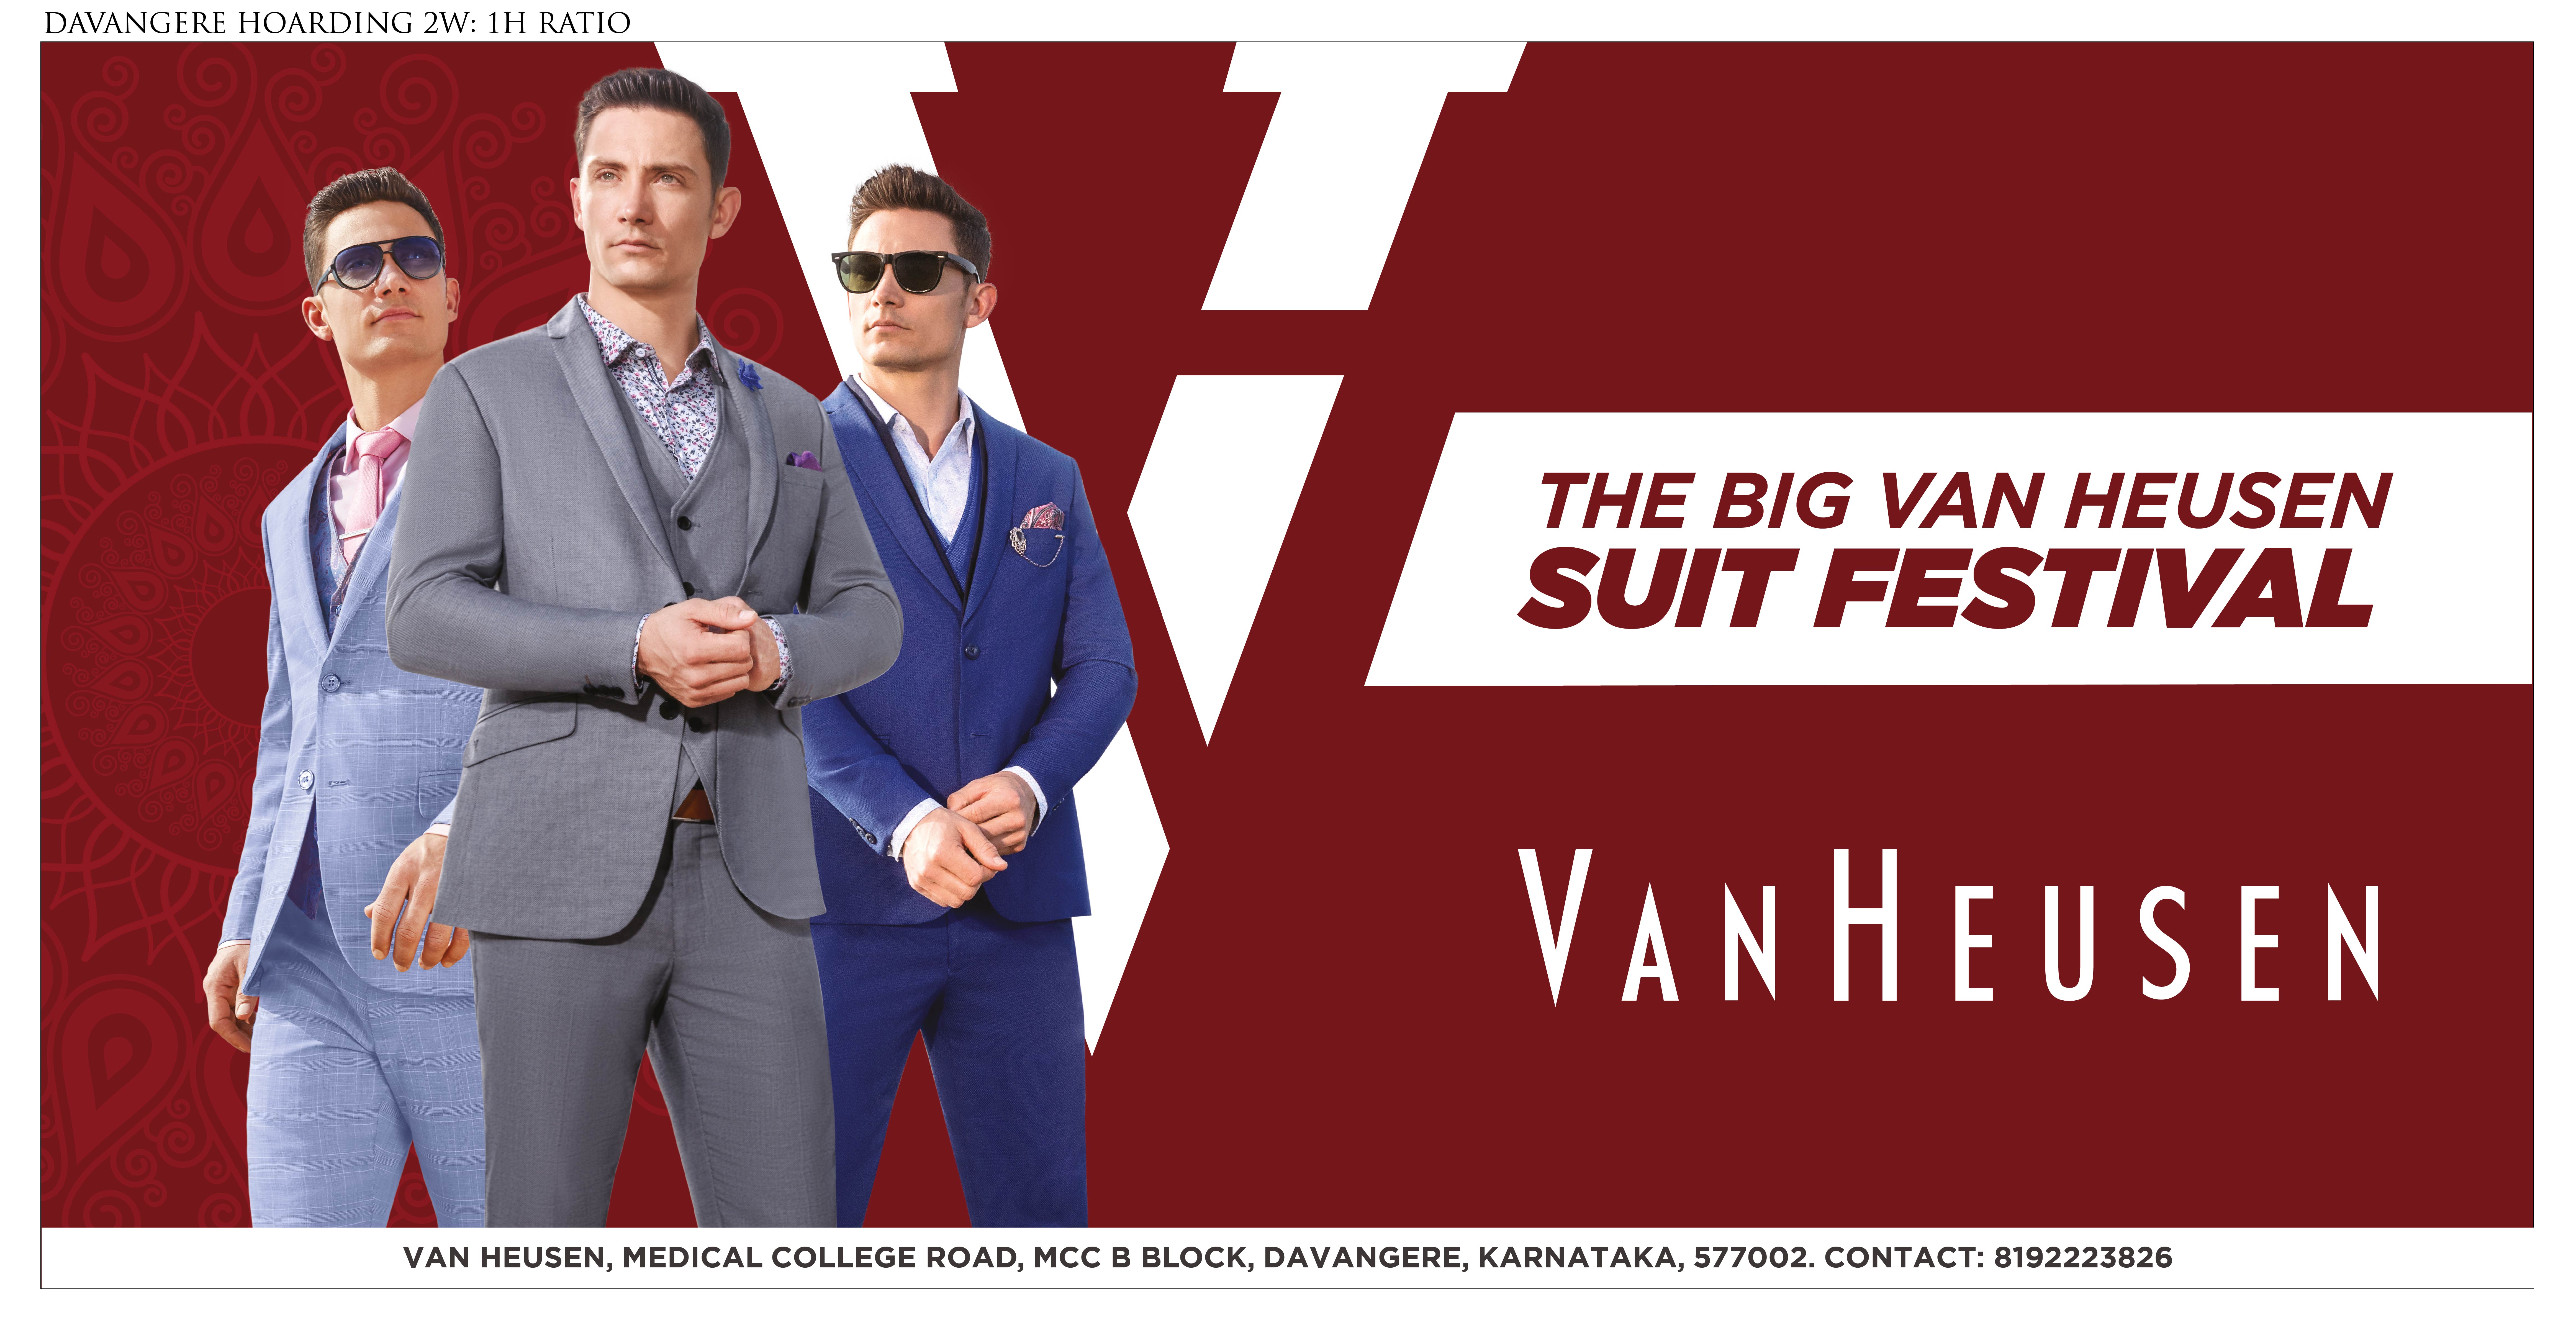 Own this festive season with The Big Van Heusen Suit Festival decoding=